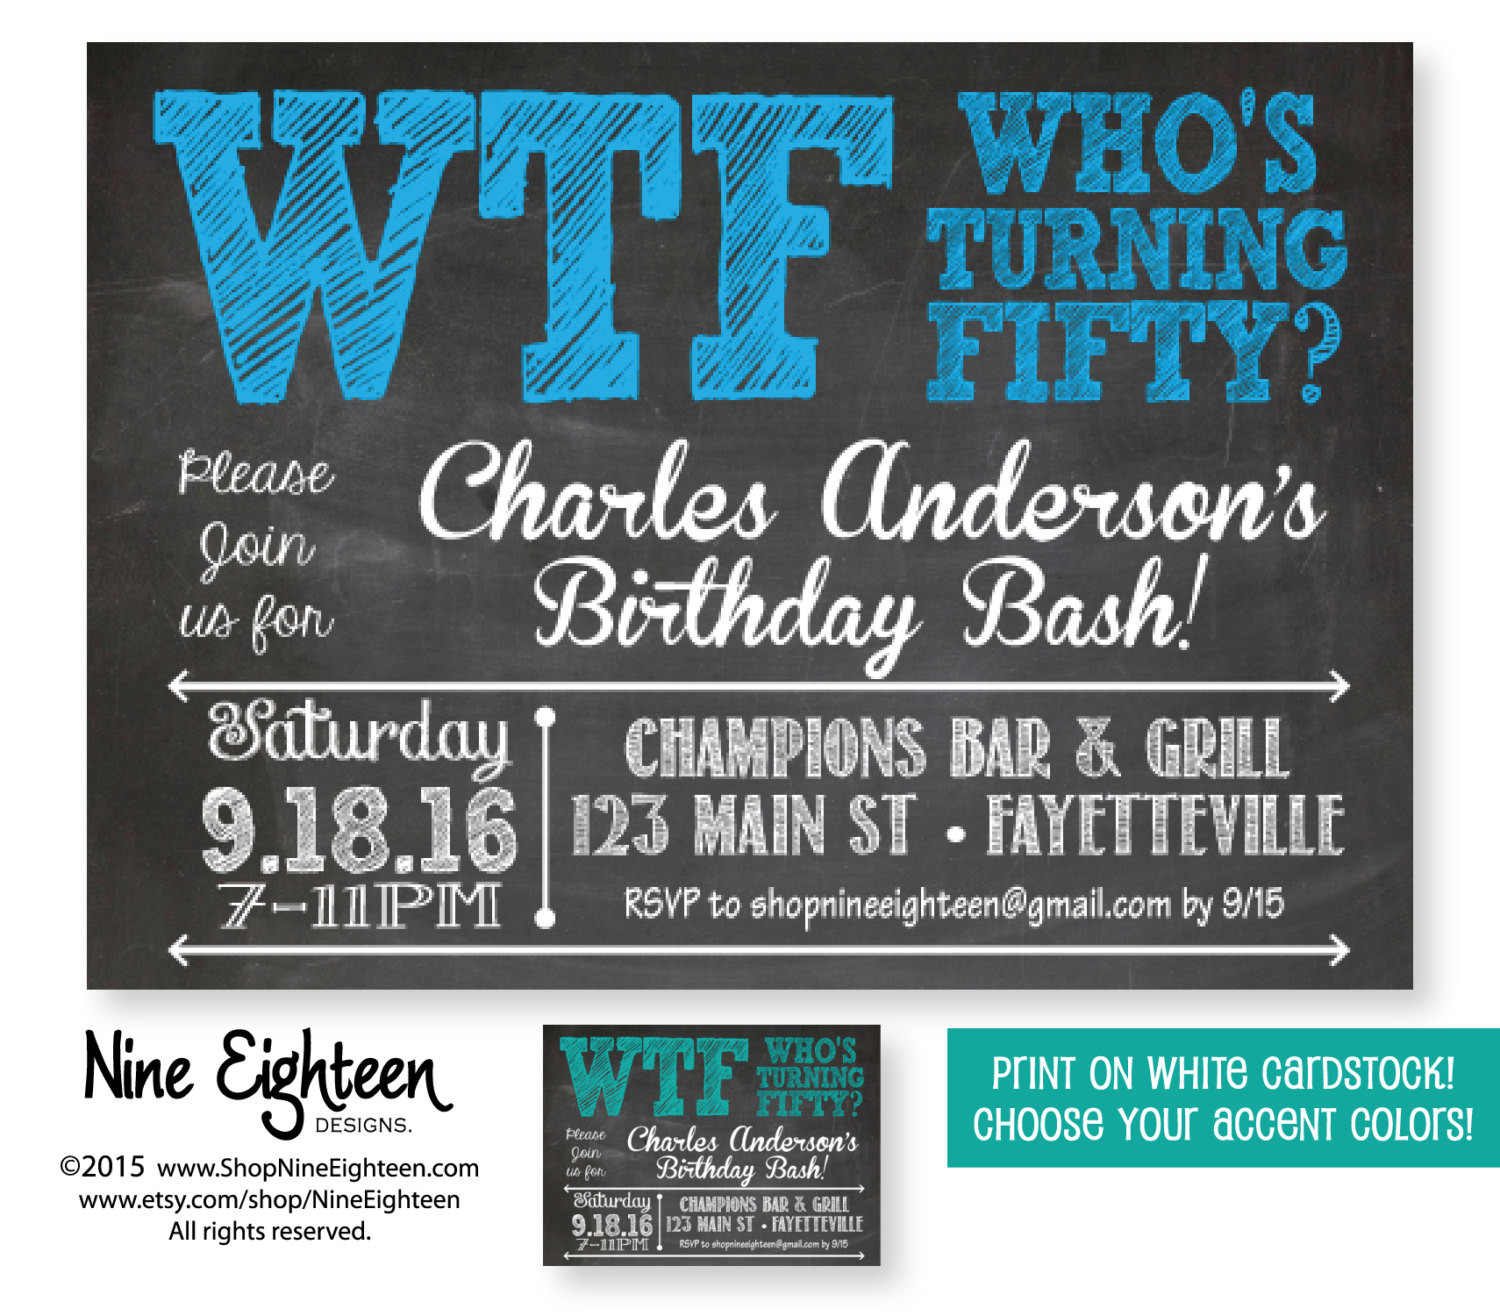 50th Birthday Party Invitation
 50th Birthday Party Invitation WTF Who s Turning by